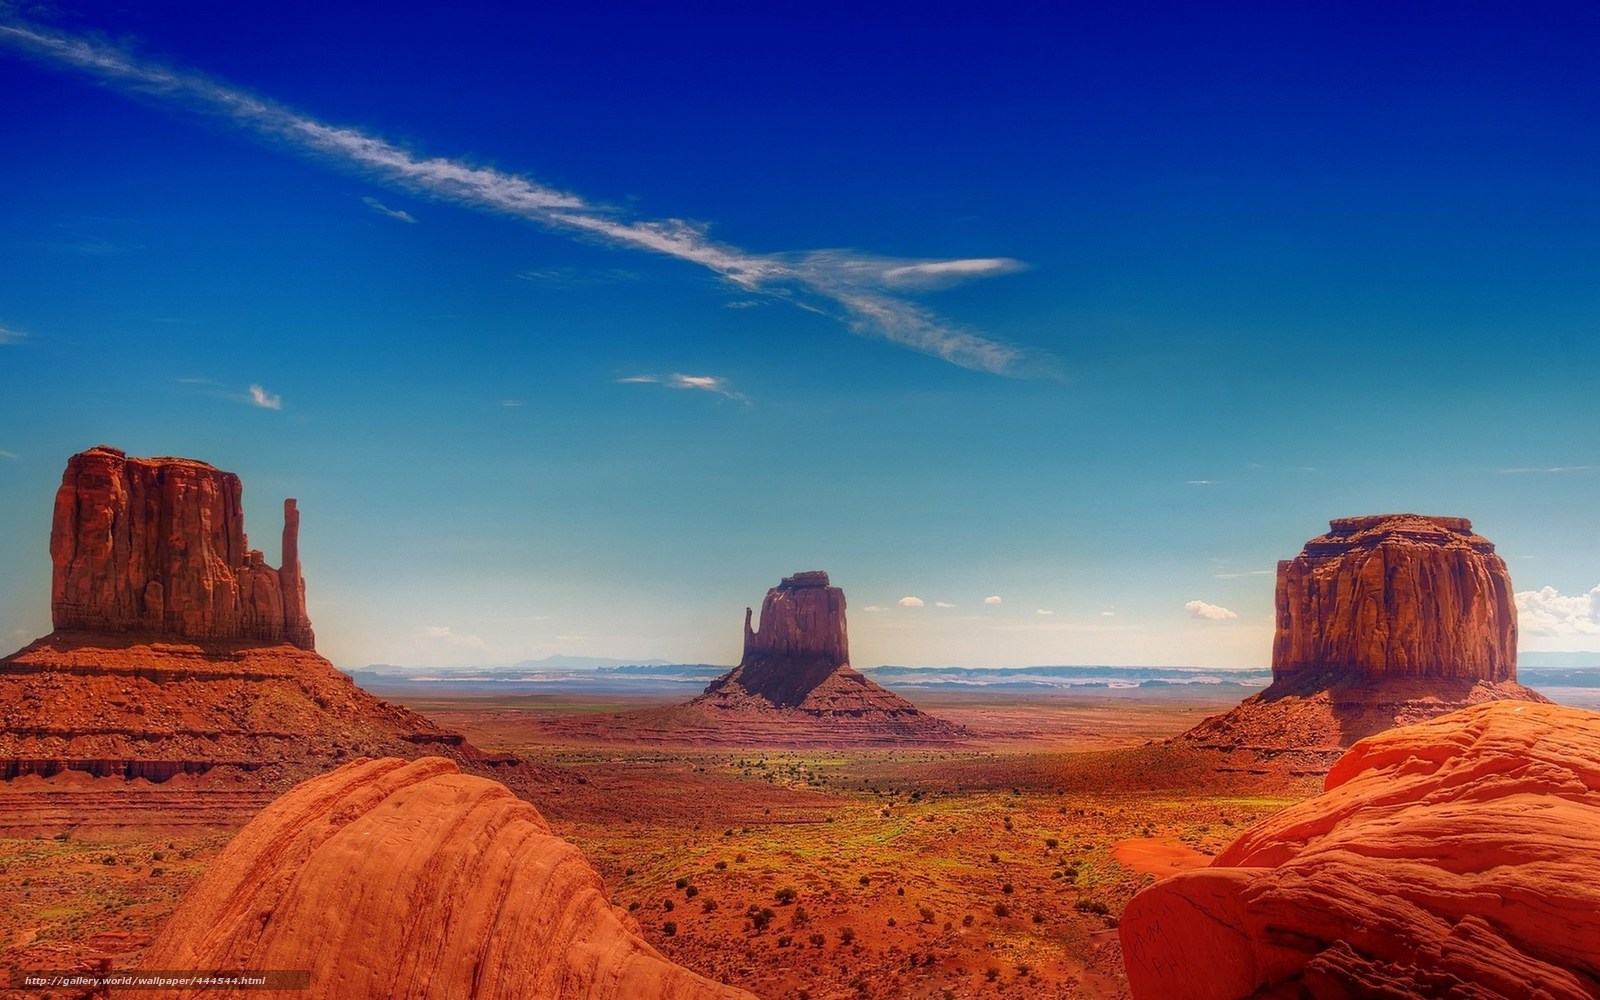 Download wallpaper canyon USA USA Arizona desktop wallpaper in 1600x1000